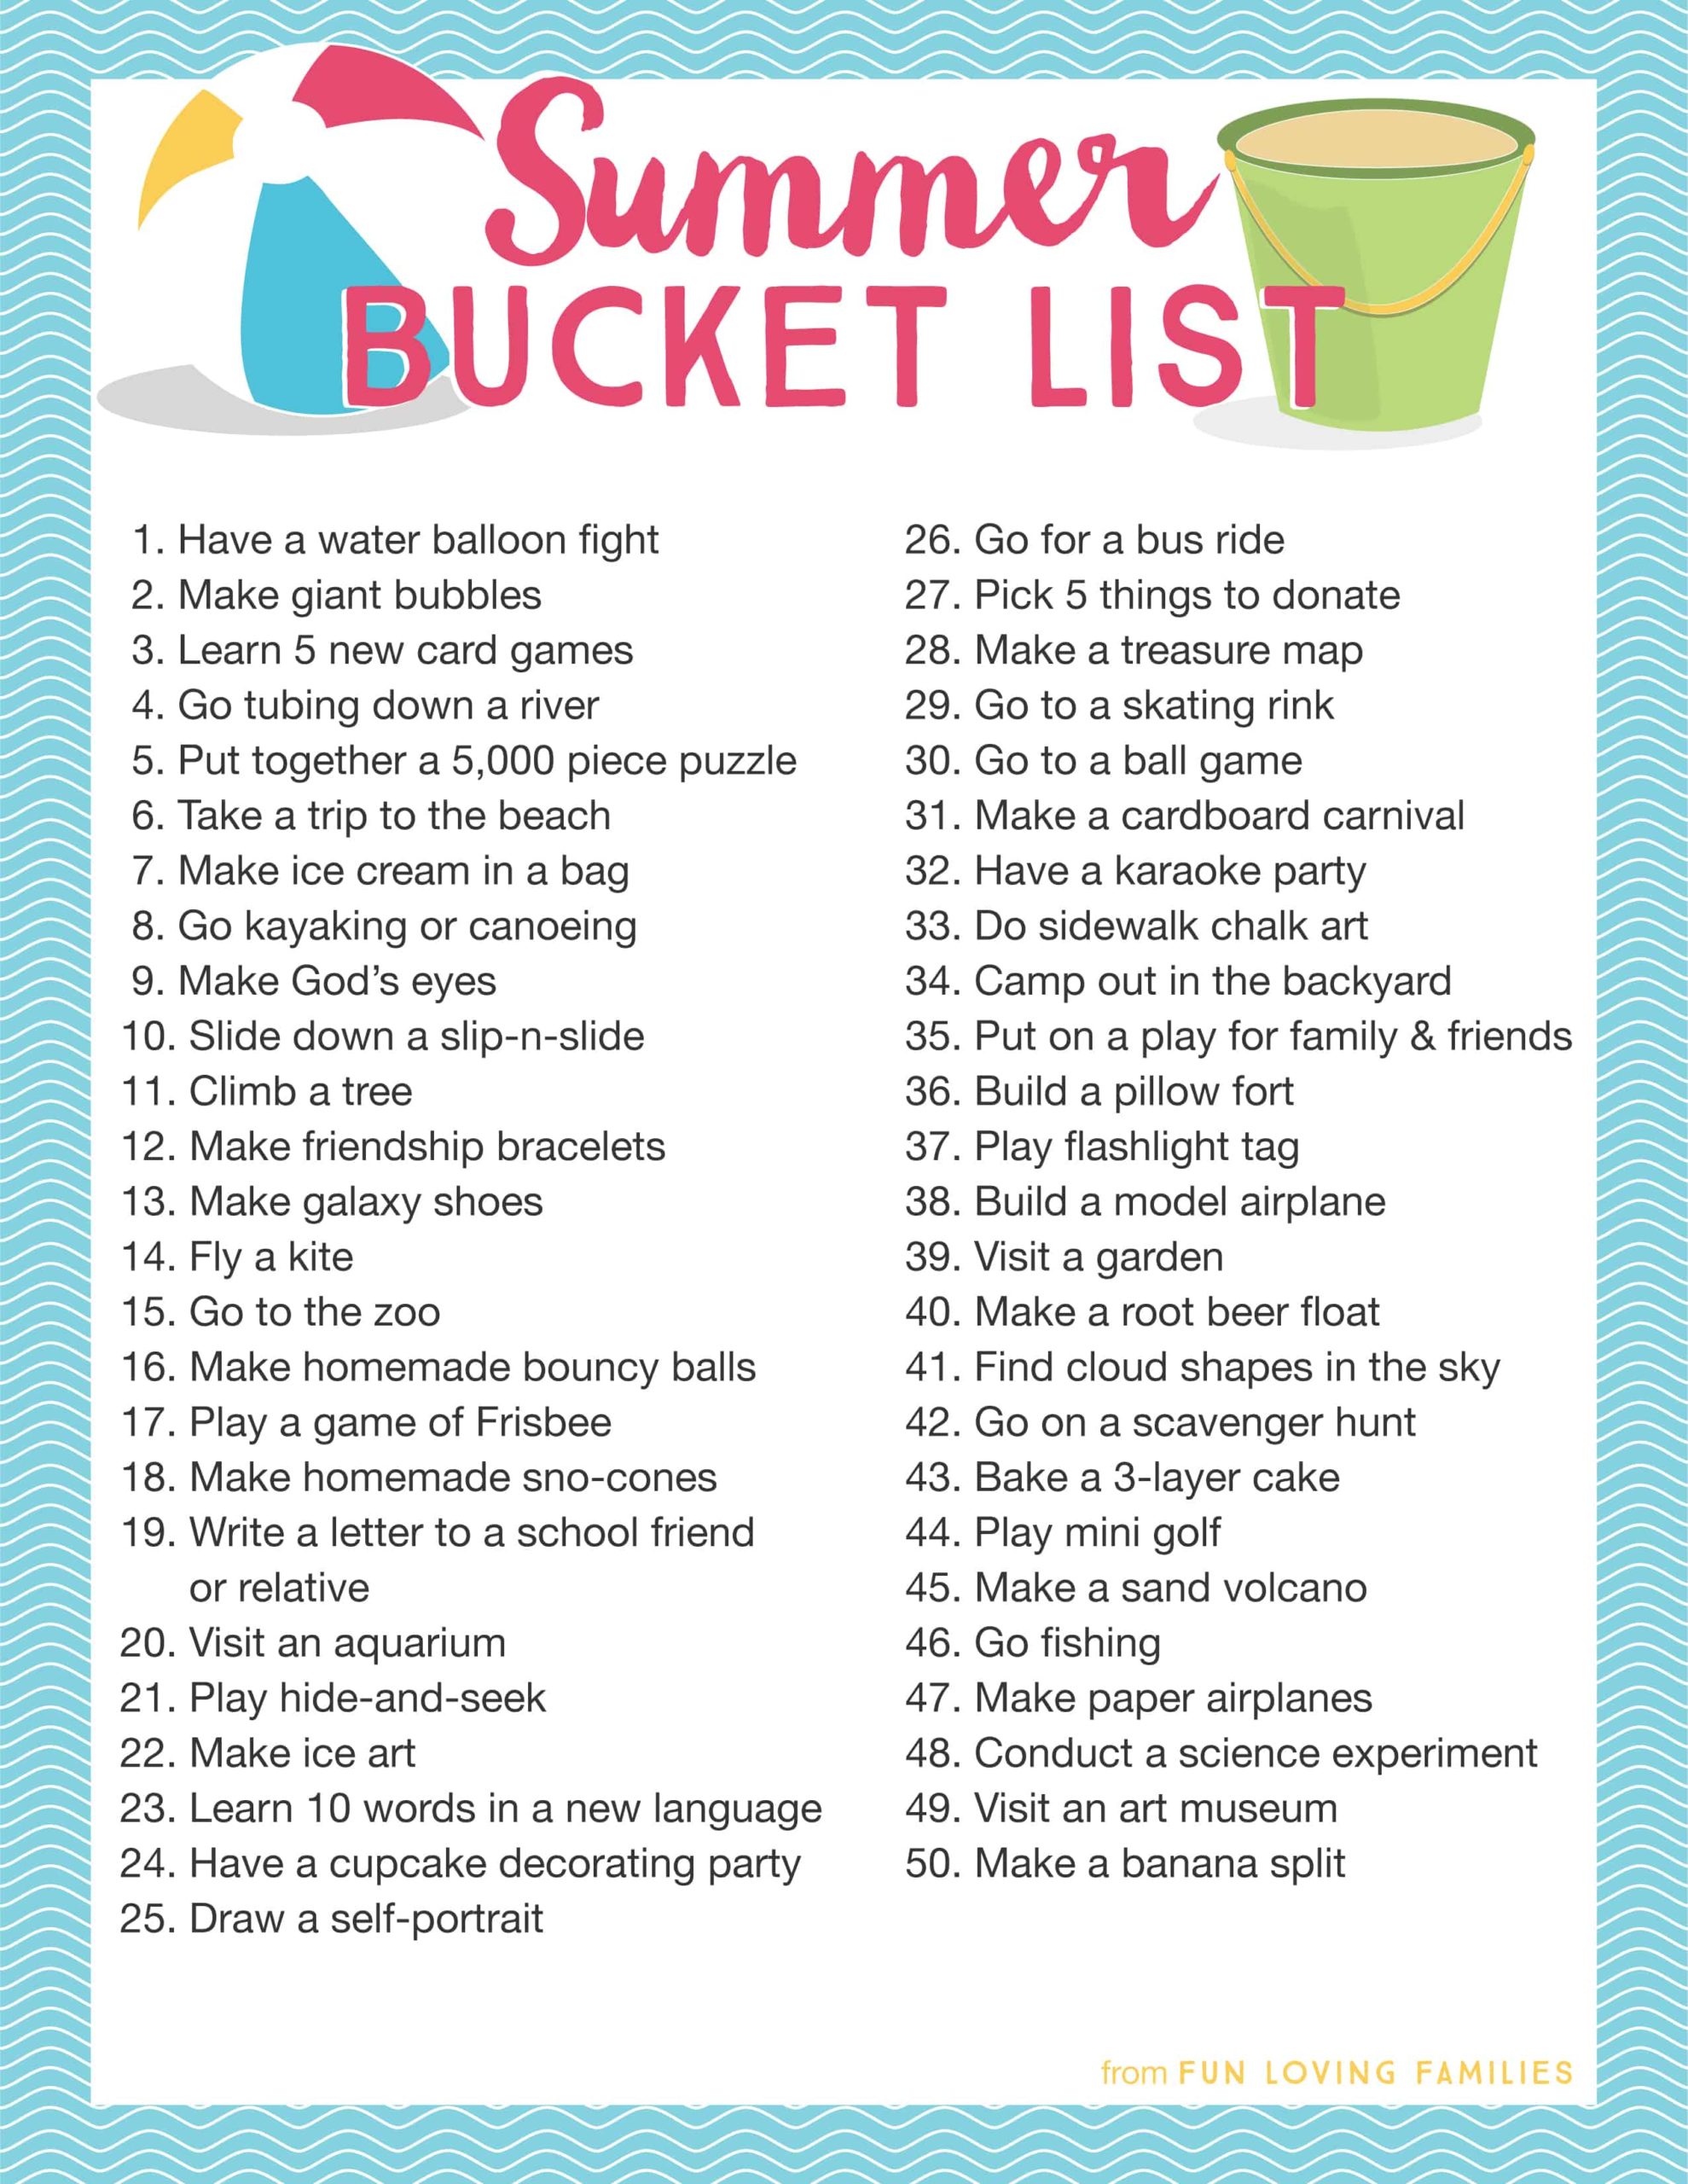 summer-bucket-list-for-families-fun-loving-families